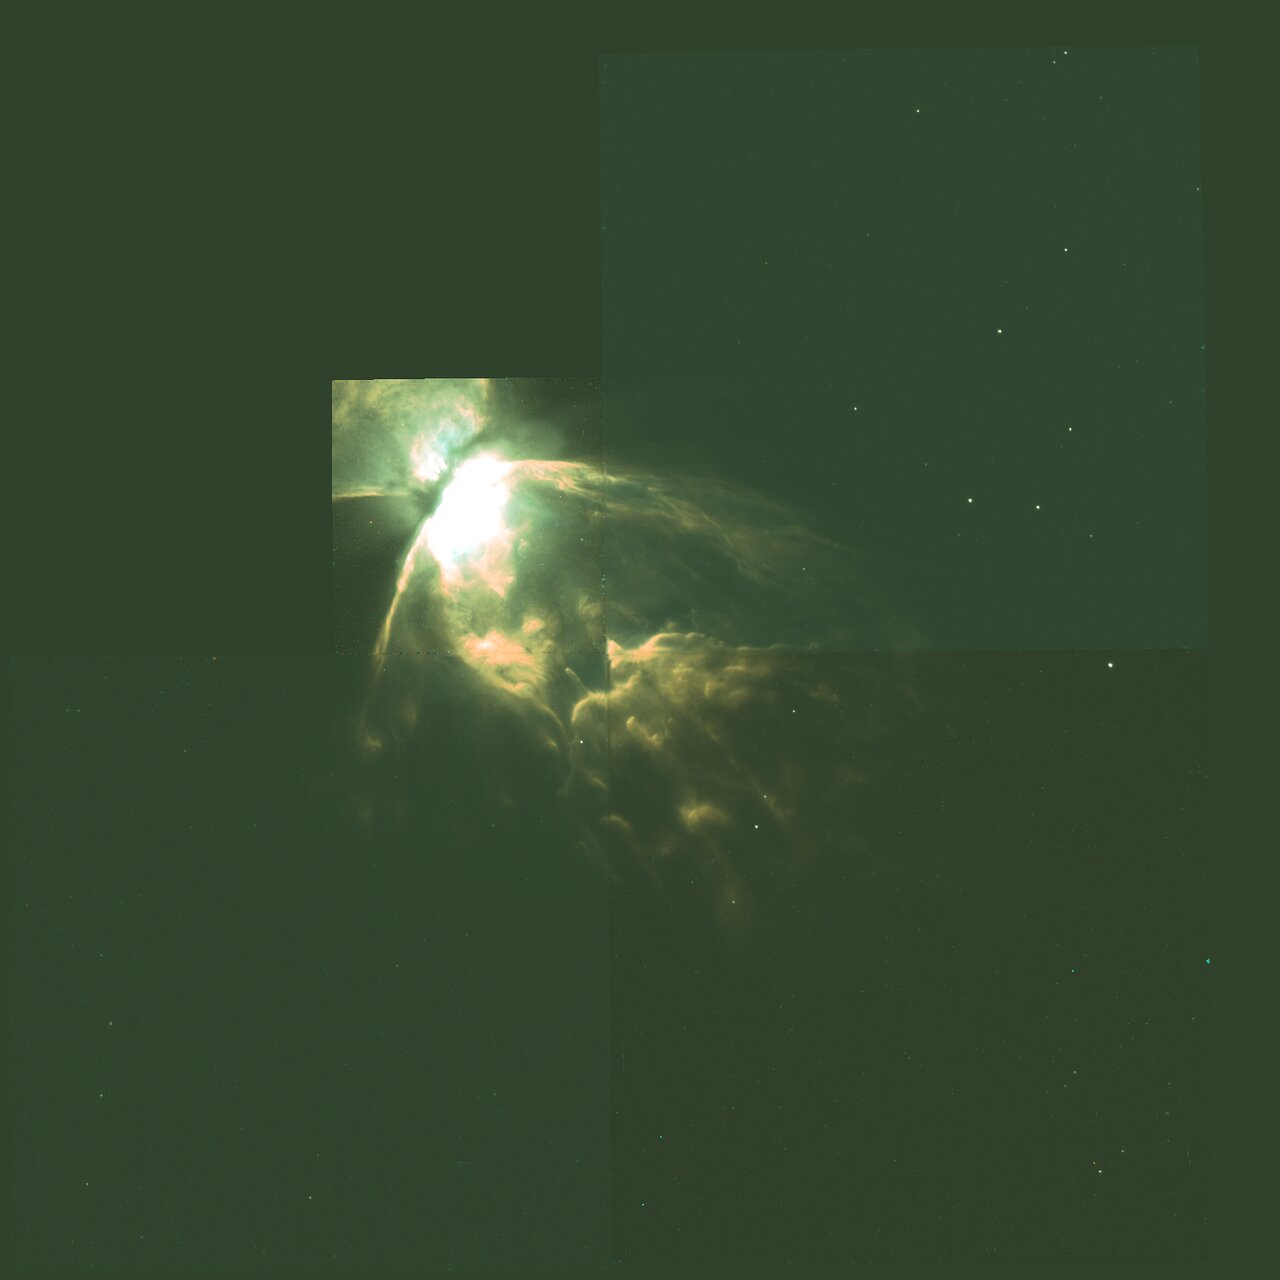 Educational Material: FITS Liberator - Planetary nebula NGC 6302 - the Bug nebula